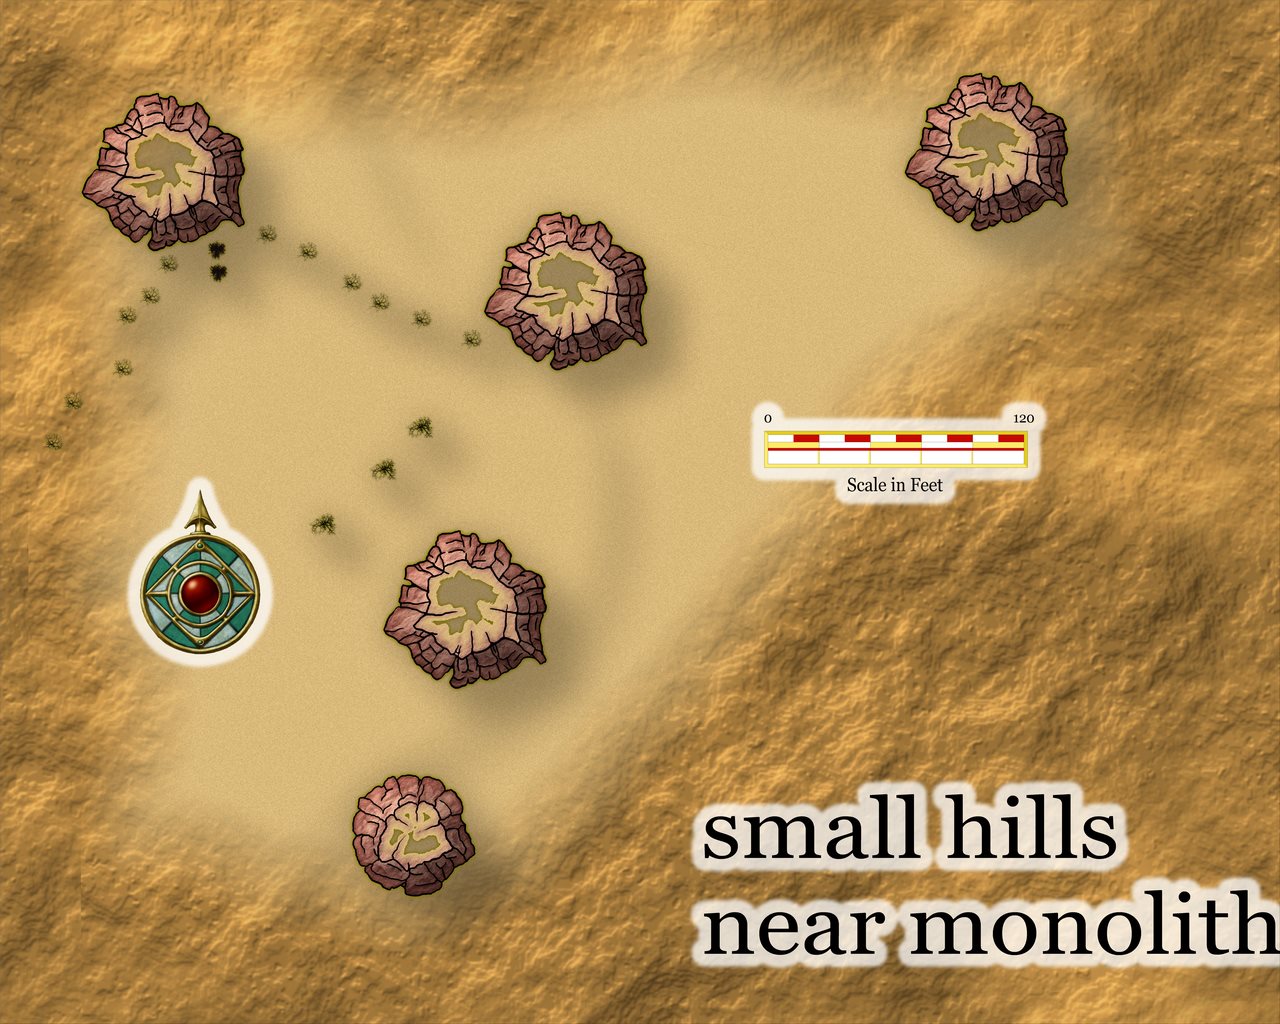 Nibirum Map: monolith hills by JimP